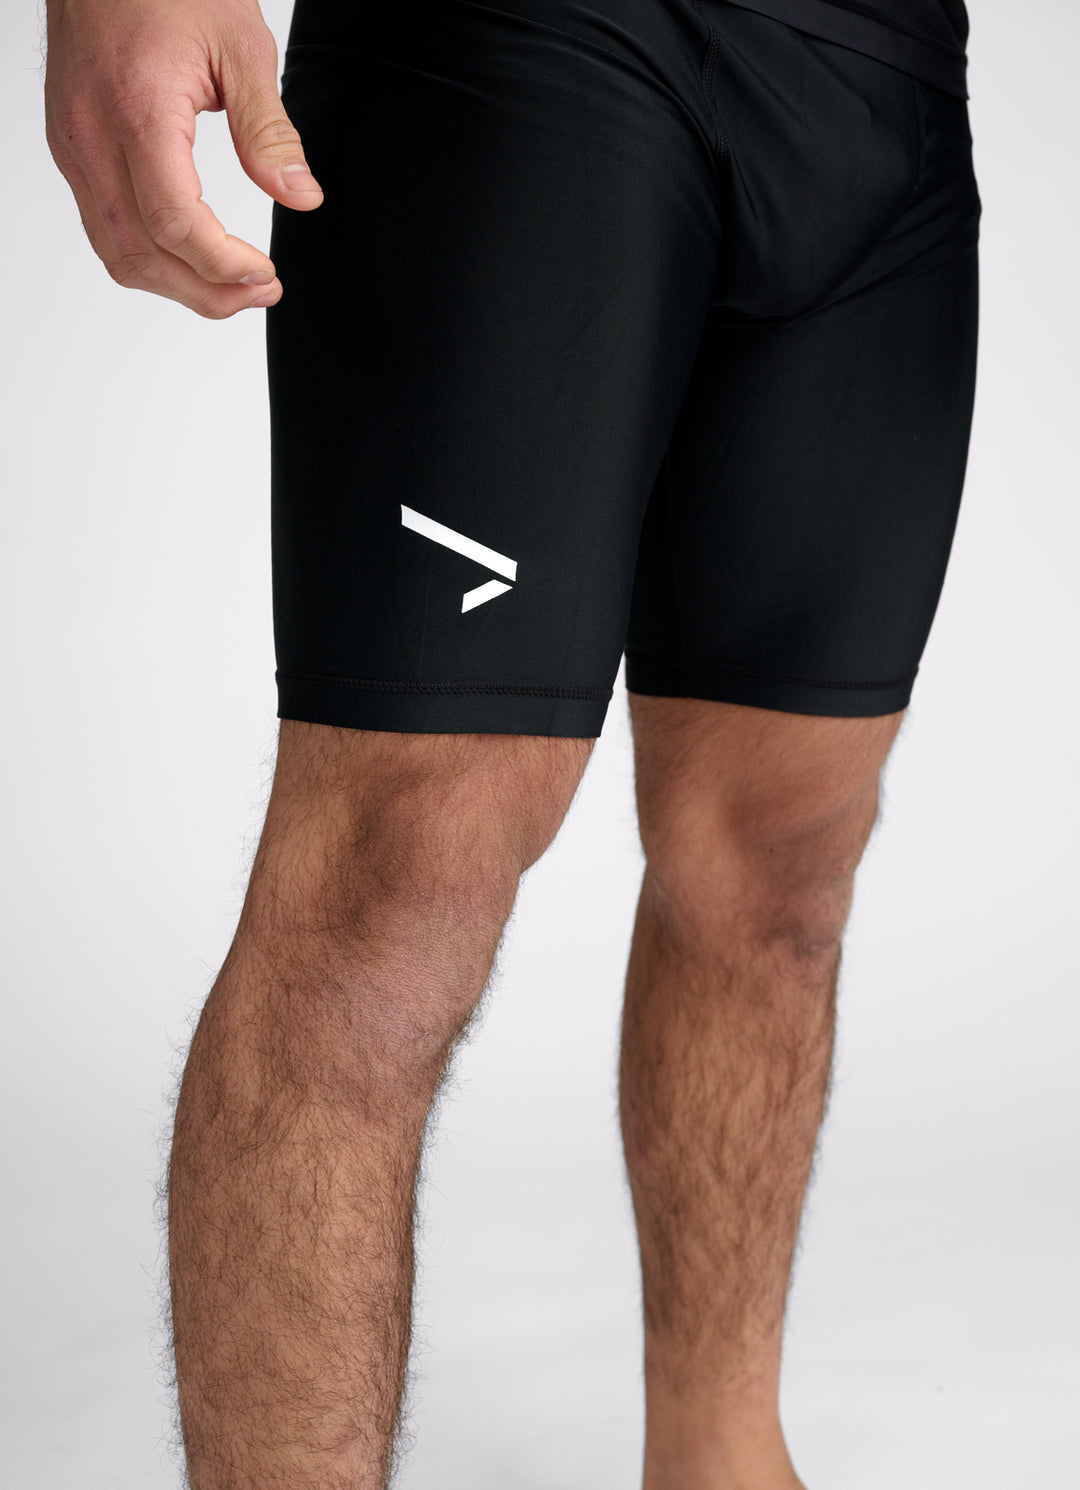 IPPONGEAR Essential Vale Tudo Shorts